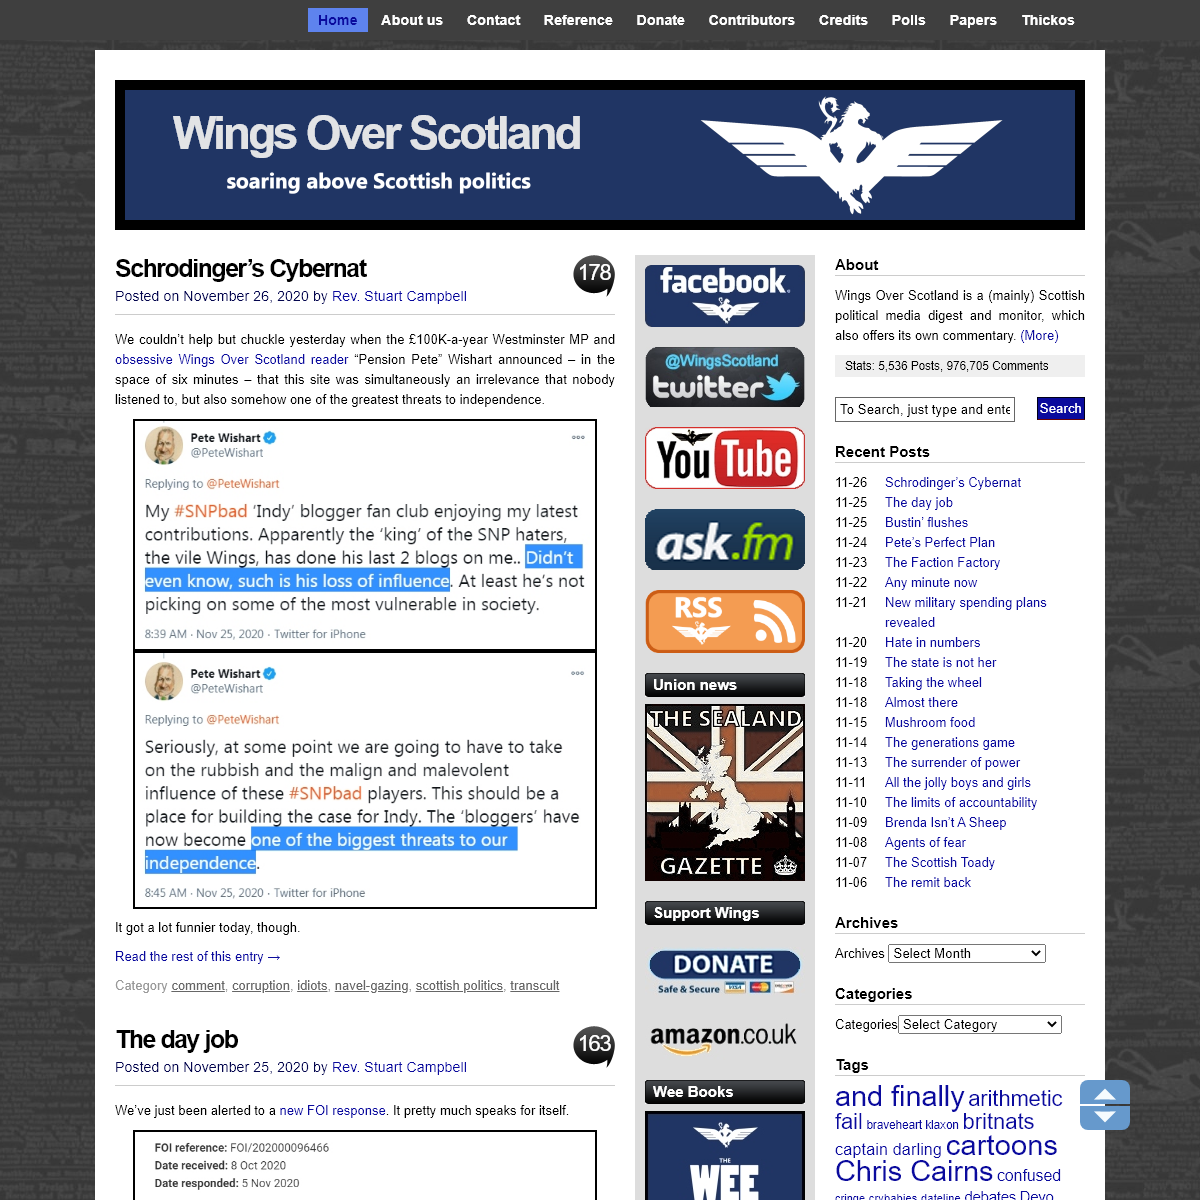 A complete backup of wingsoverscotland.com